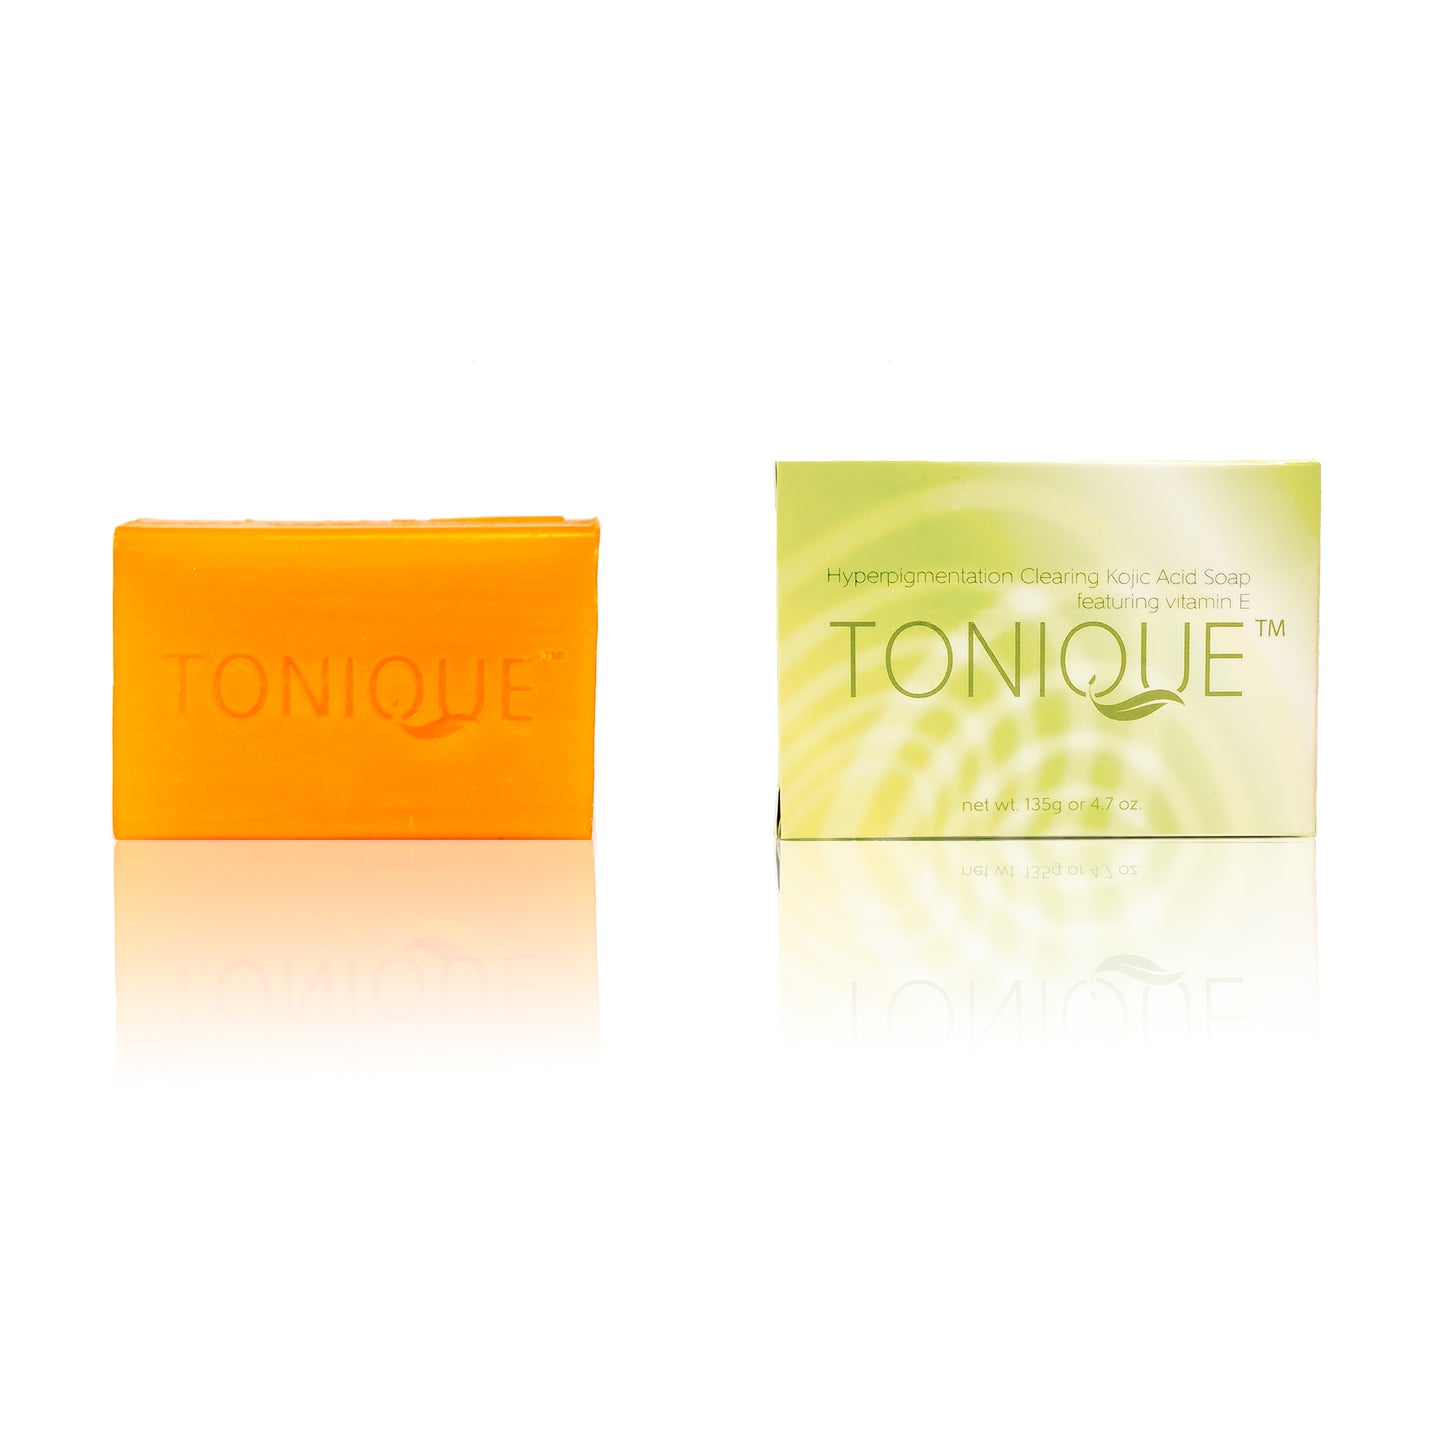 Wholesale Kojic Acid Bar (Starting at 50 pieces) - Tonique Skincare